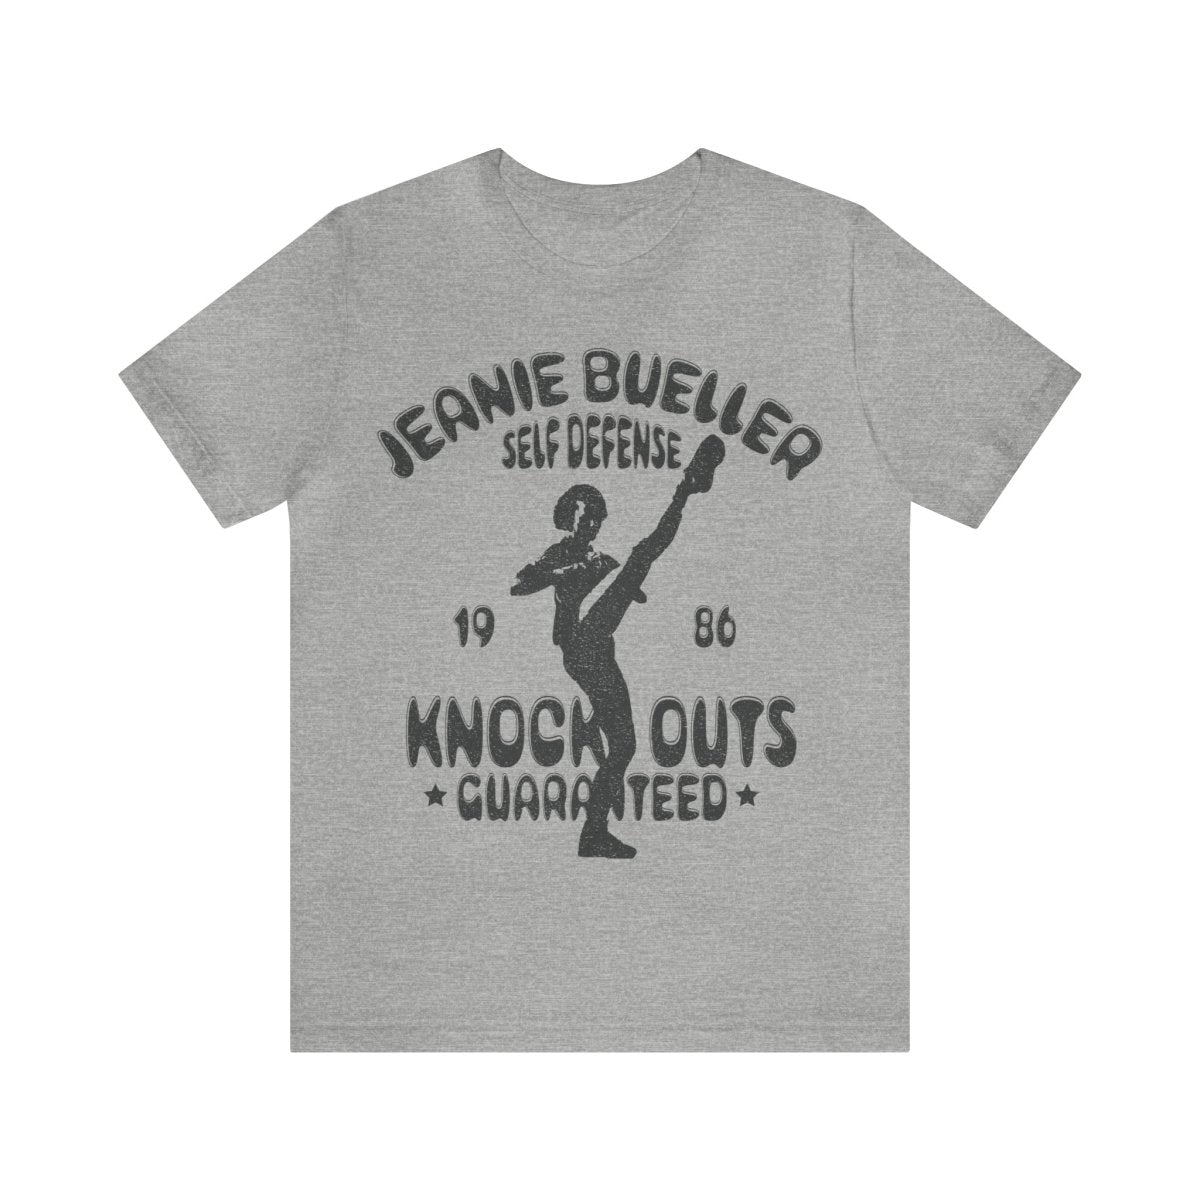 Jeanie Bueller Premium T-Shirt, Self Defense, Home Intruder, Knock Out Kick, Funny